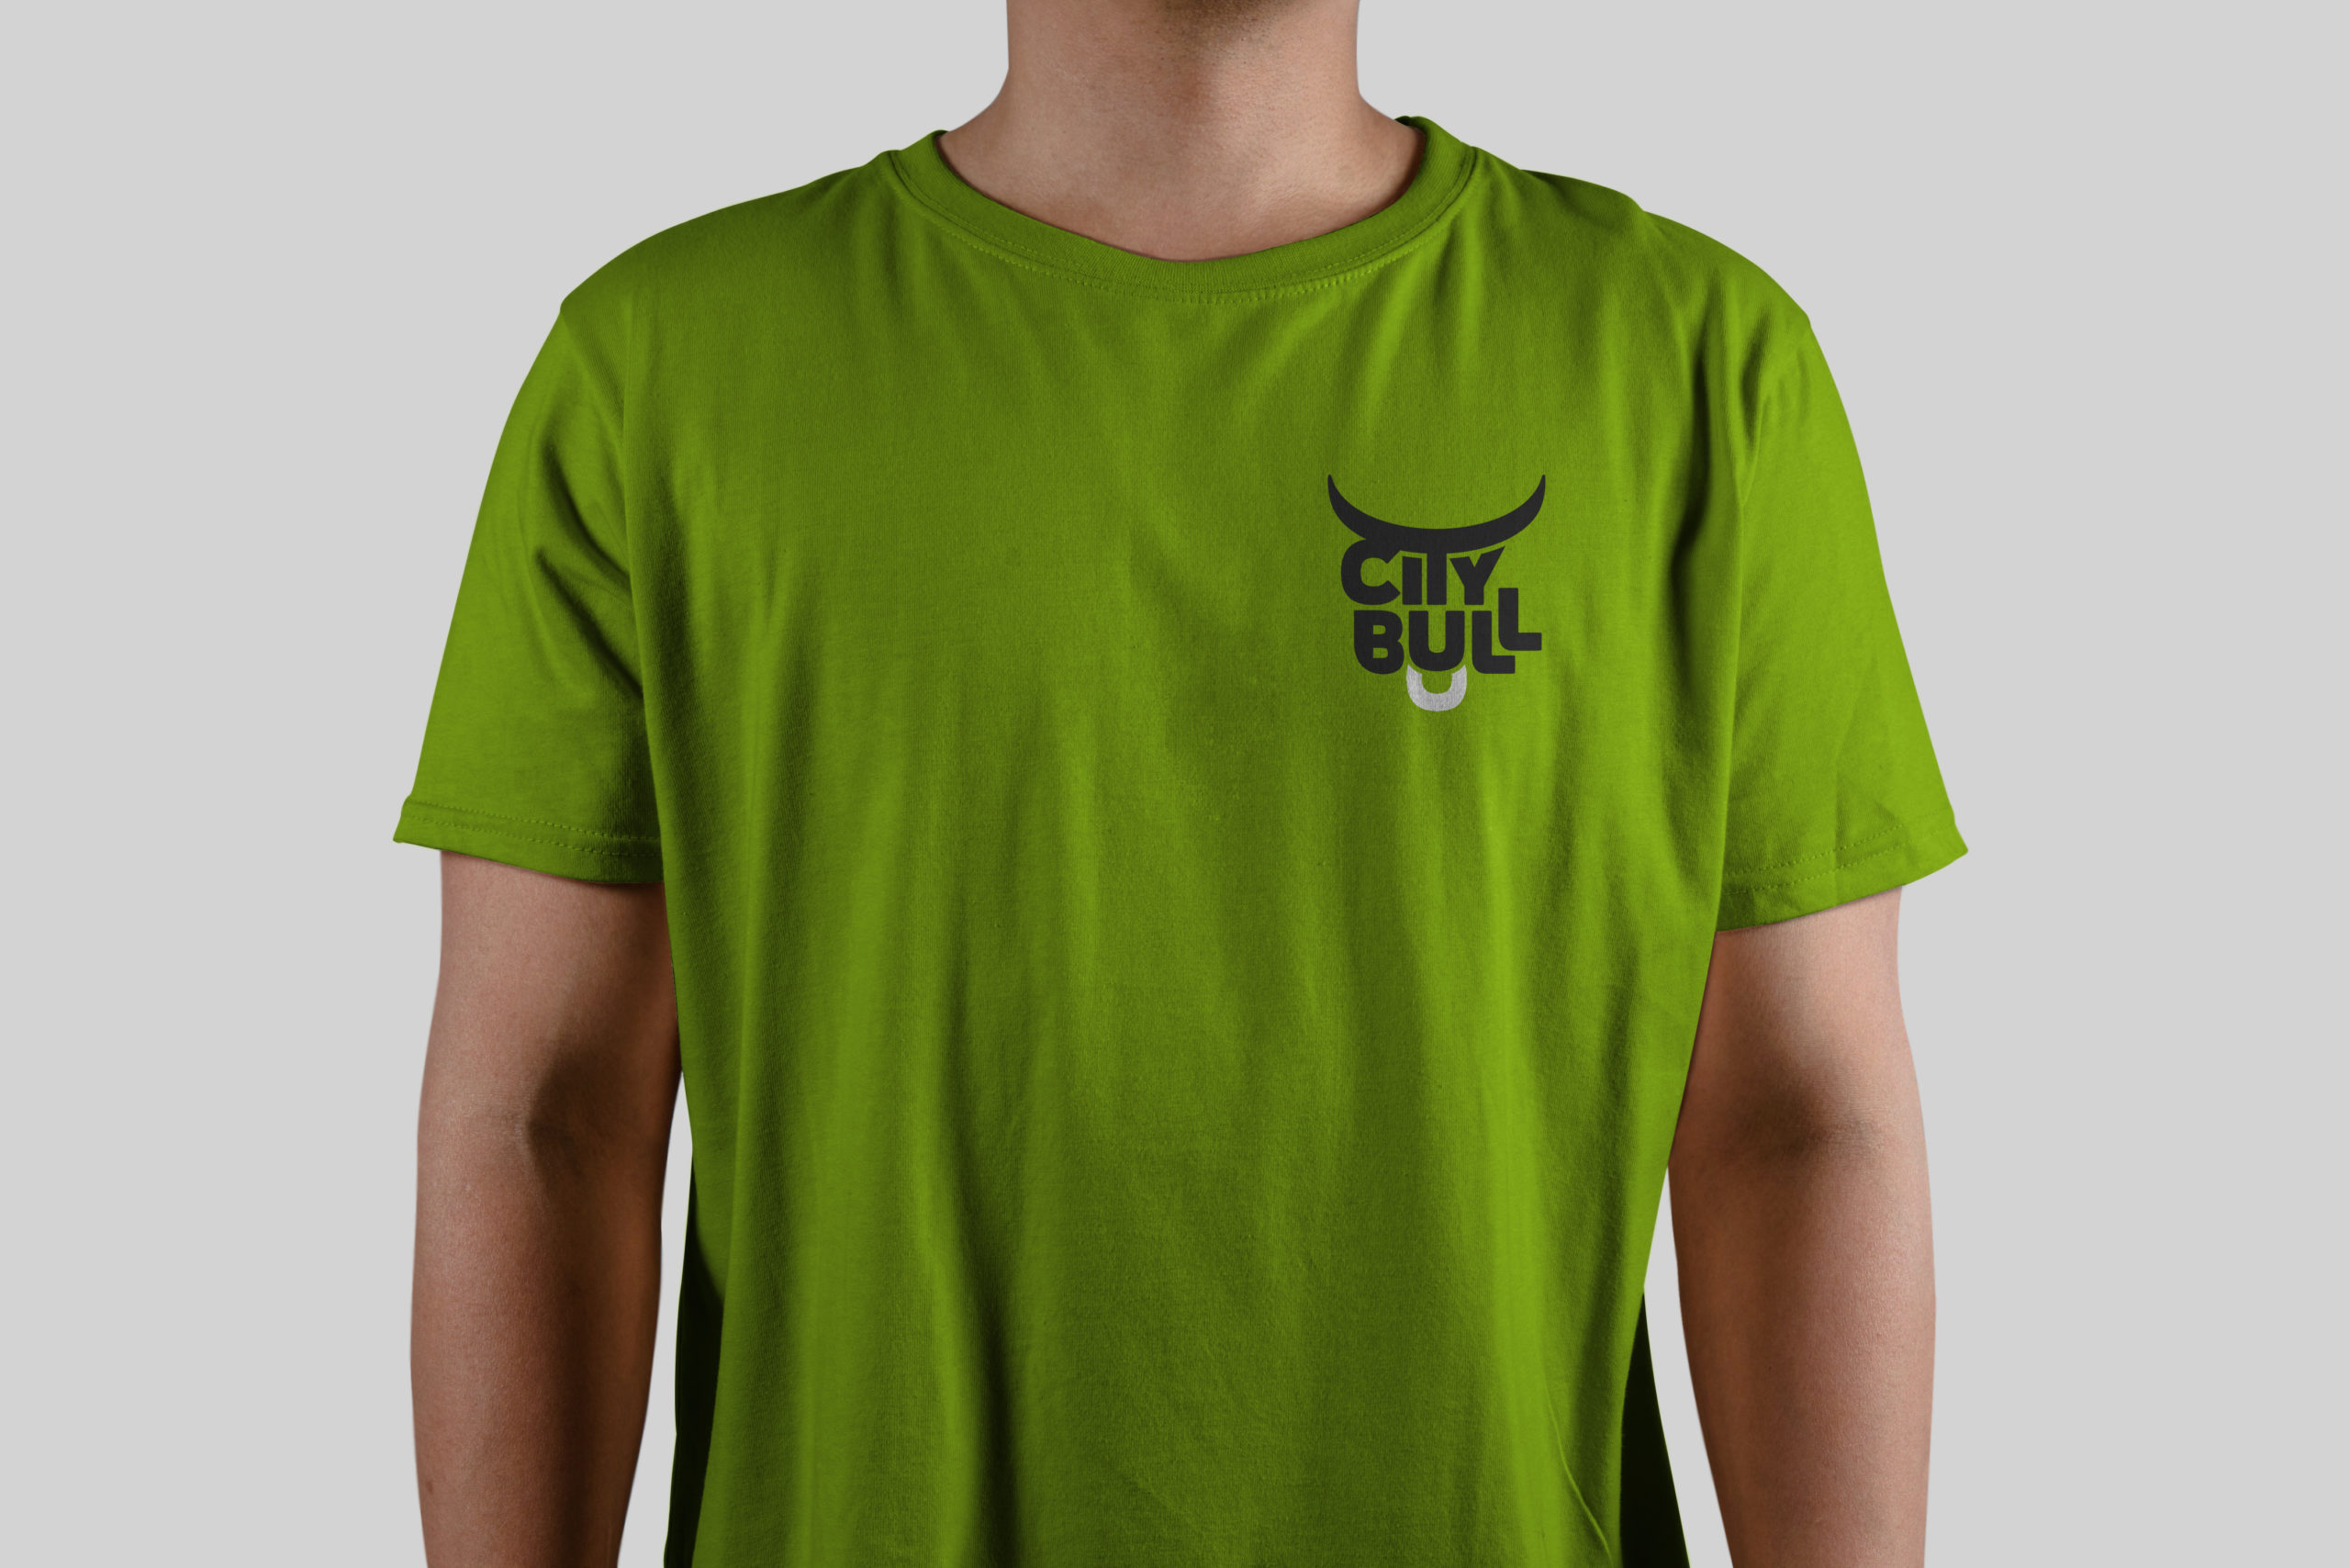 1. T-Shirt Mockup_city_shirt